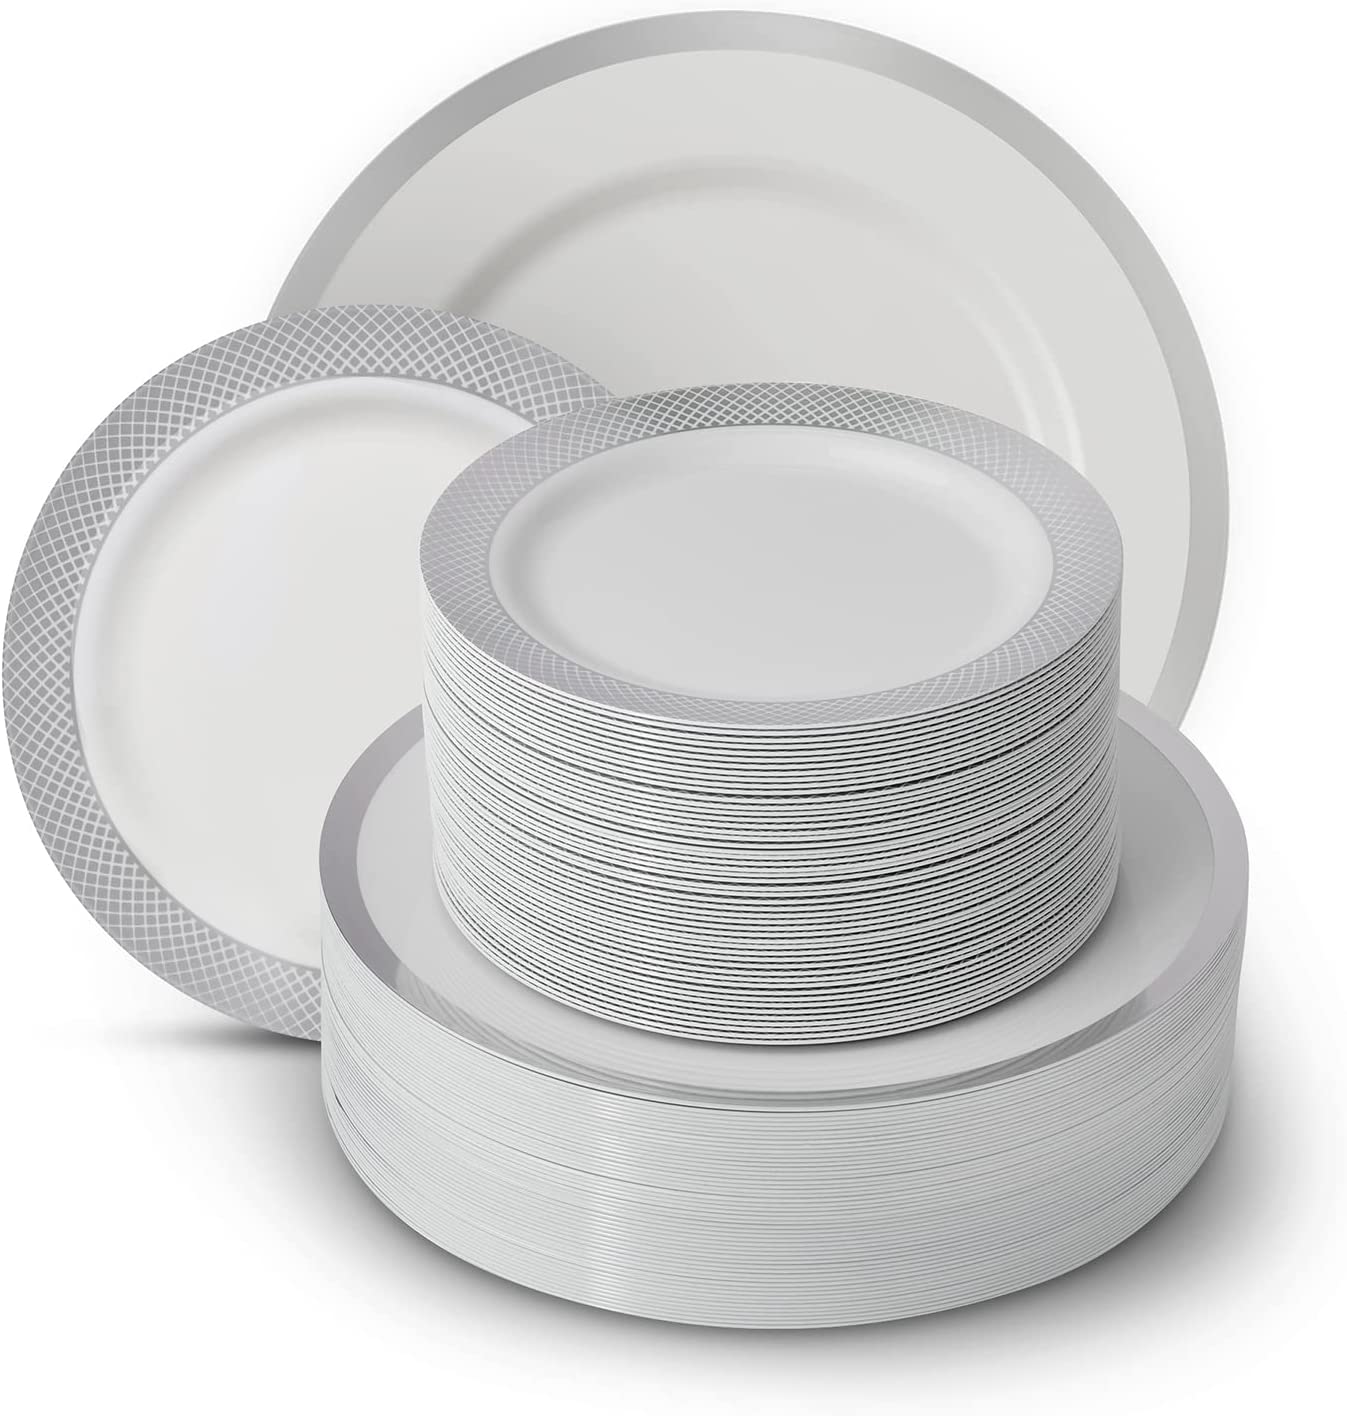 100 PCS Silver Plastic Plates - 50 Dinner Plates & 50 Salad or Dessert Plates